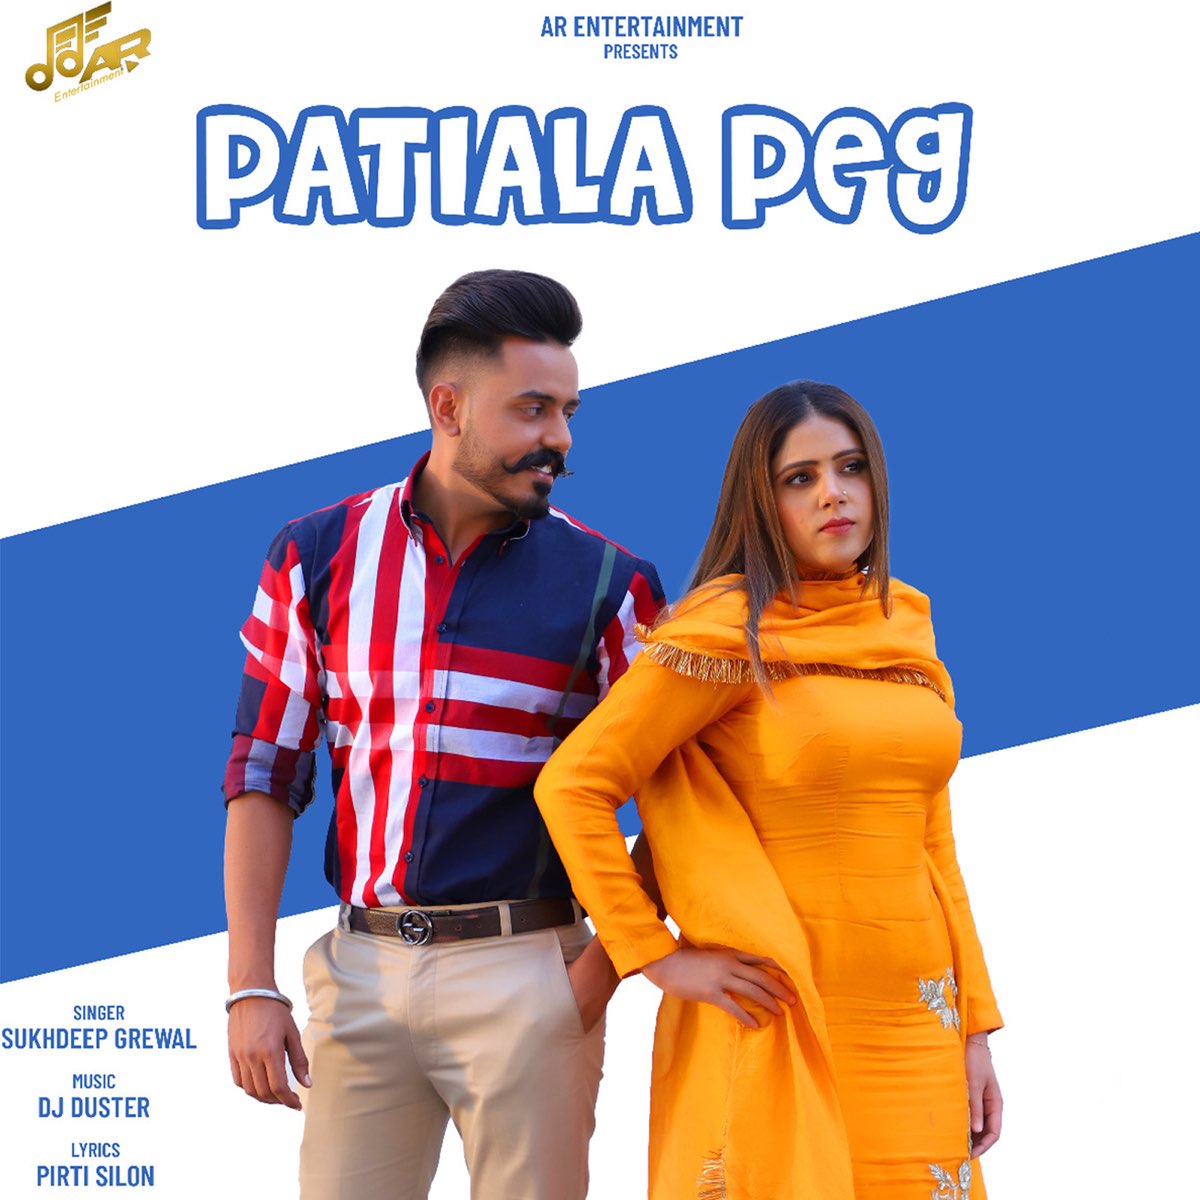 Patiala Peg - Single - Album by Sukhdeep Grewal - Apple Music